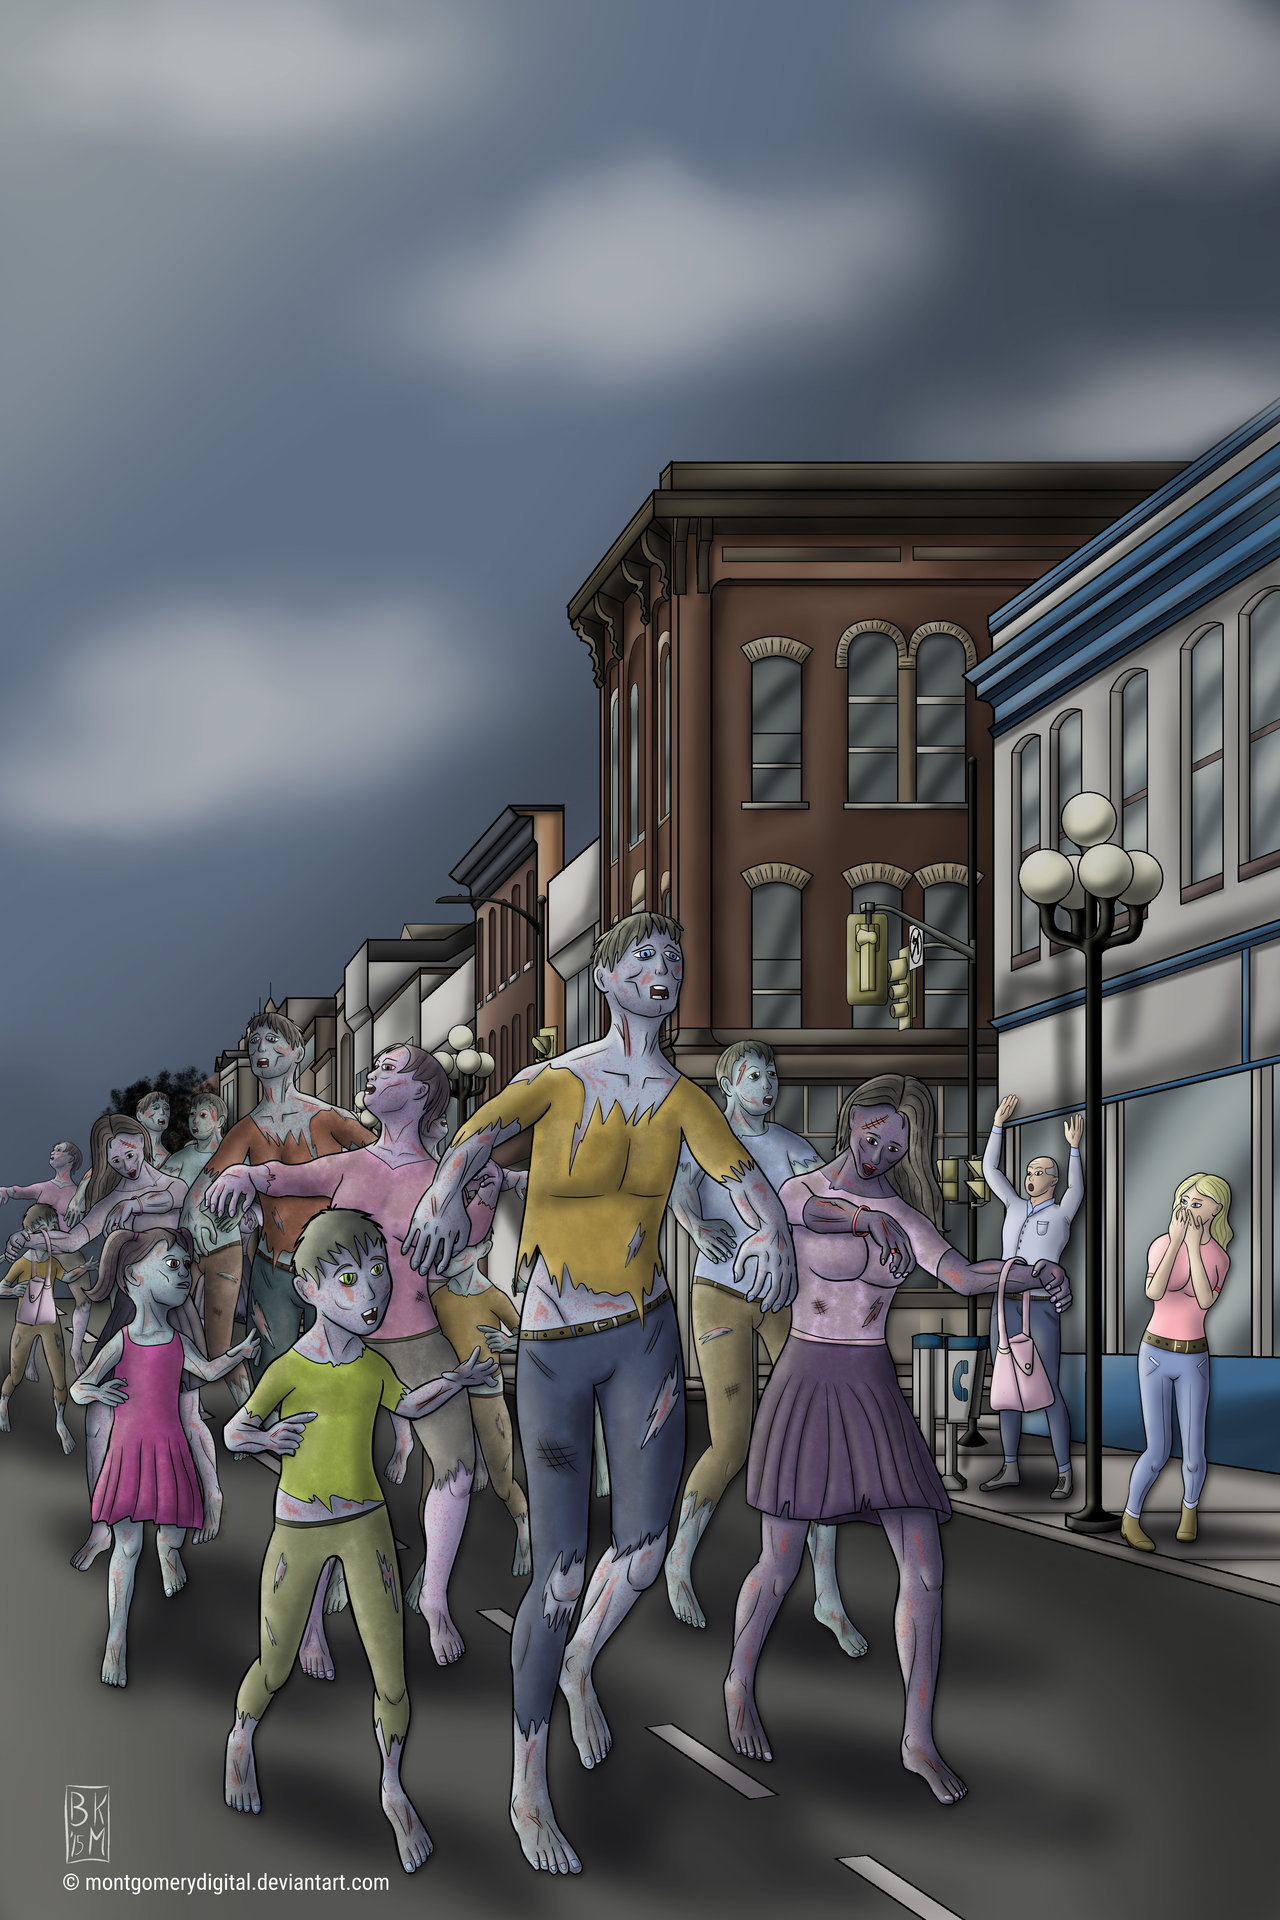 Kingston Zombie Walk Mission By Montgomerydigital